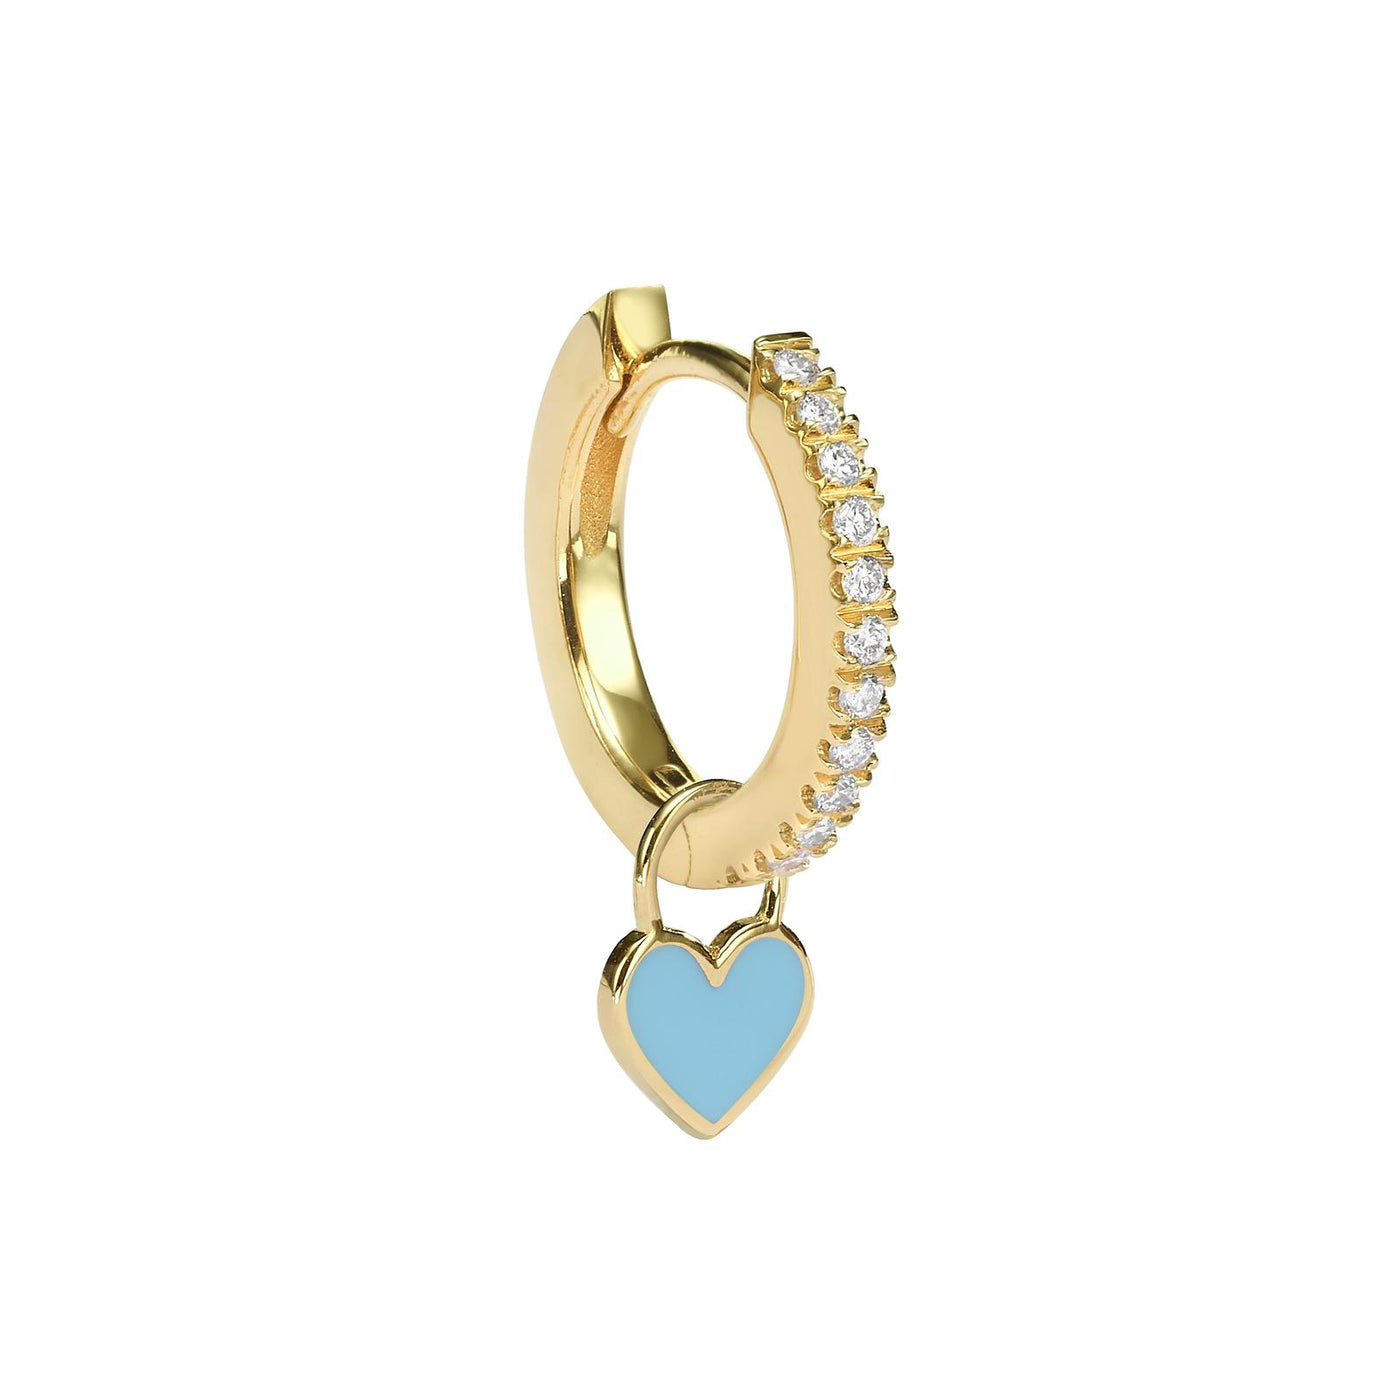 Single Midi Gypsy hearts earring - Turquoise